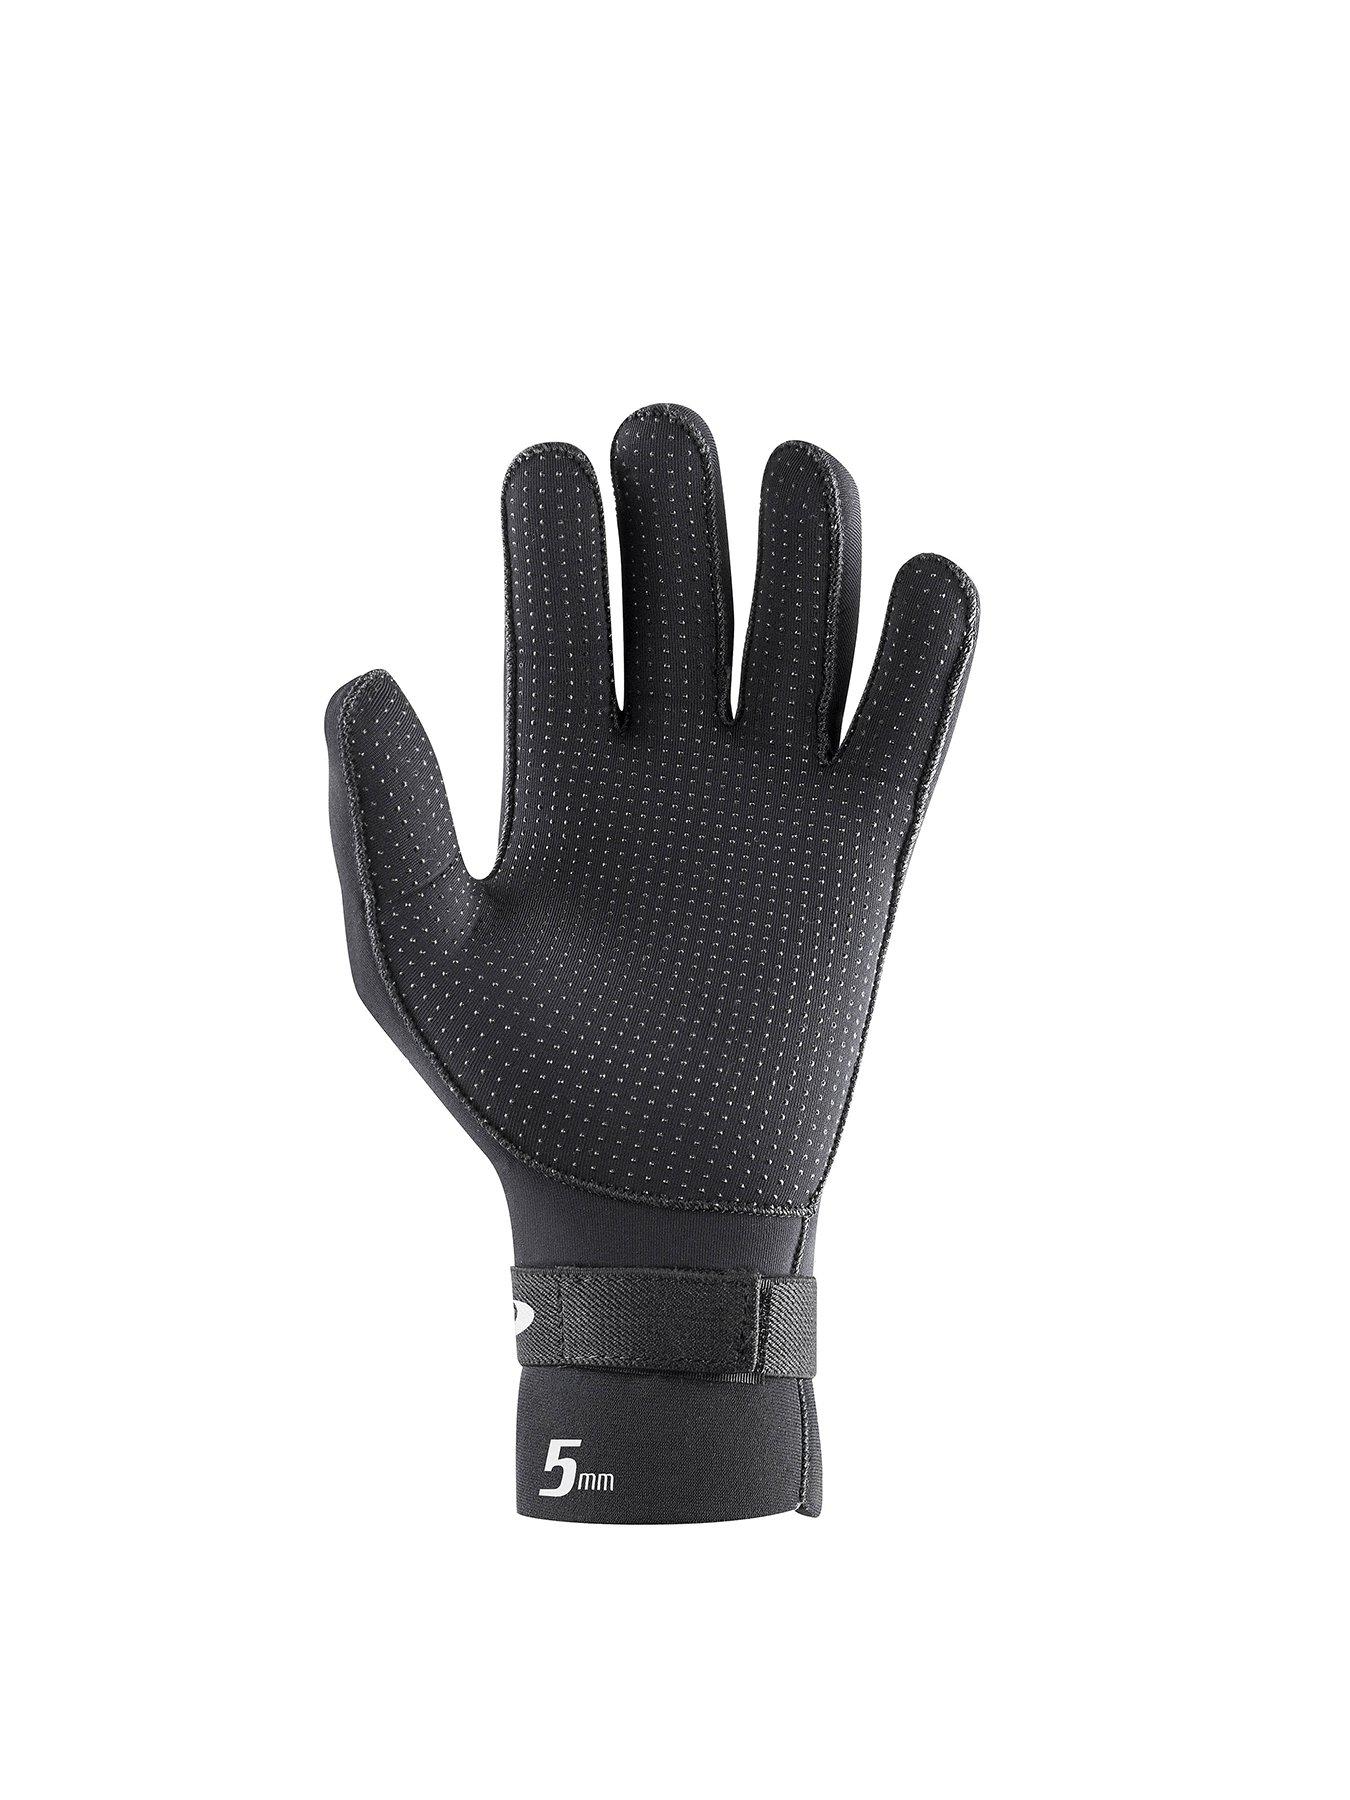 Osprey Neoprene Stretch Wetsuit Glove 5mm - Black | littlewoods.com